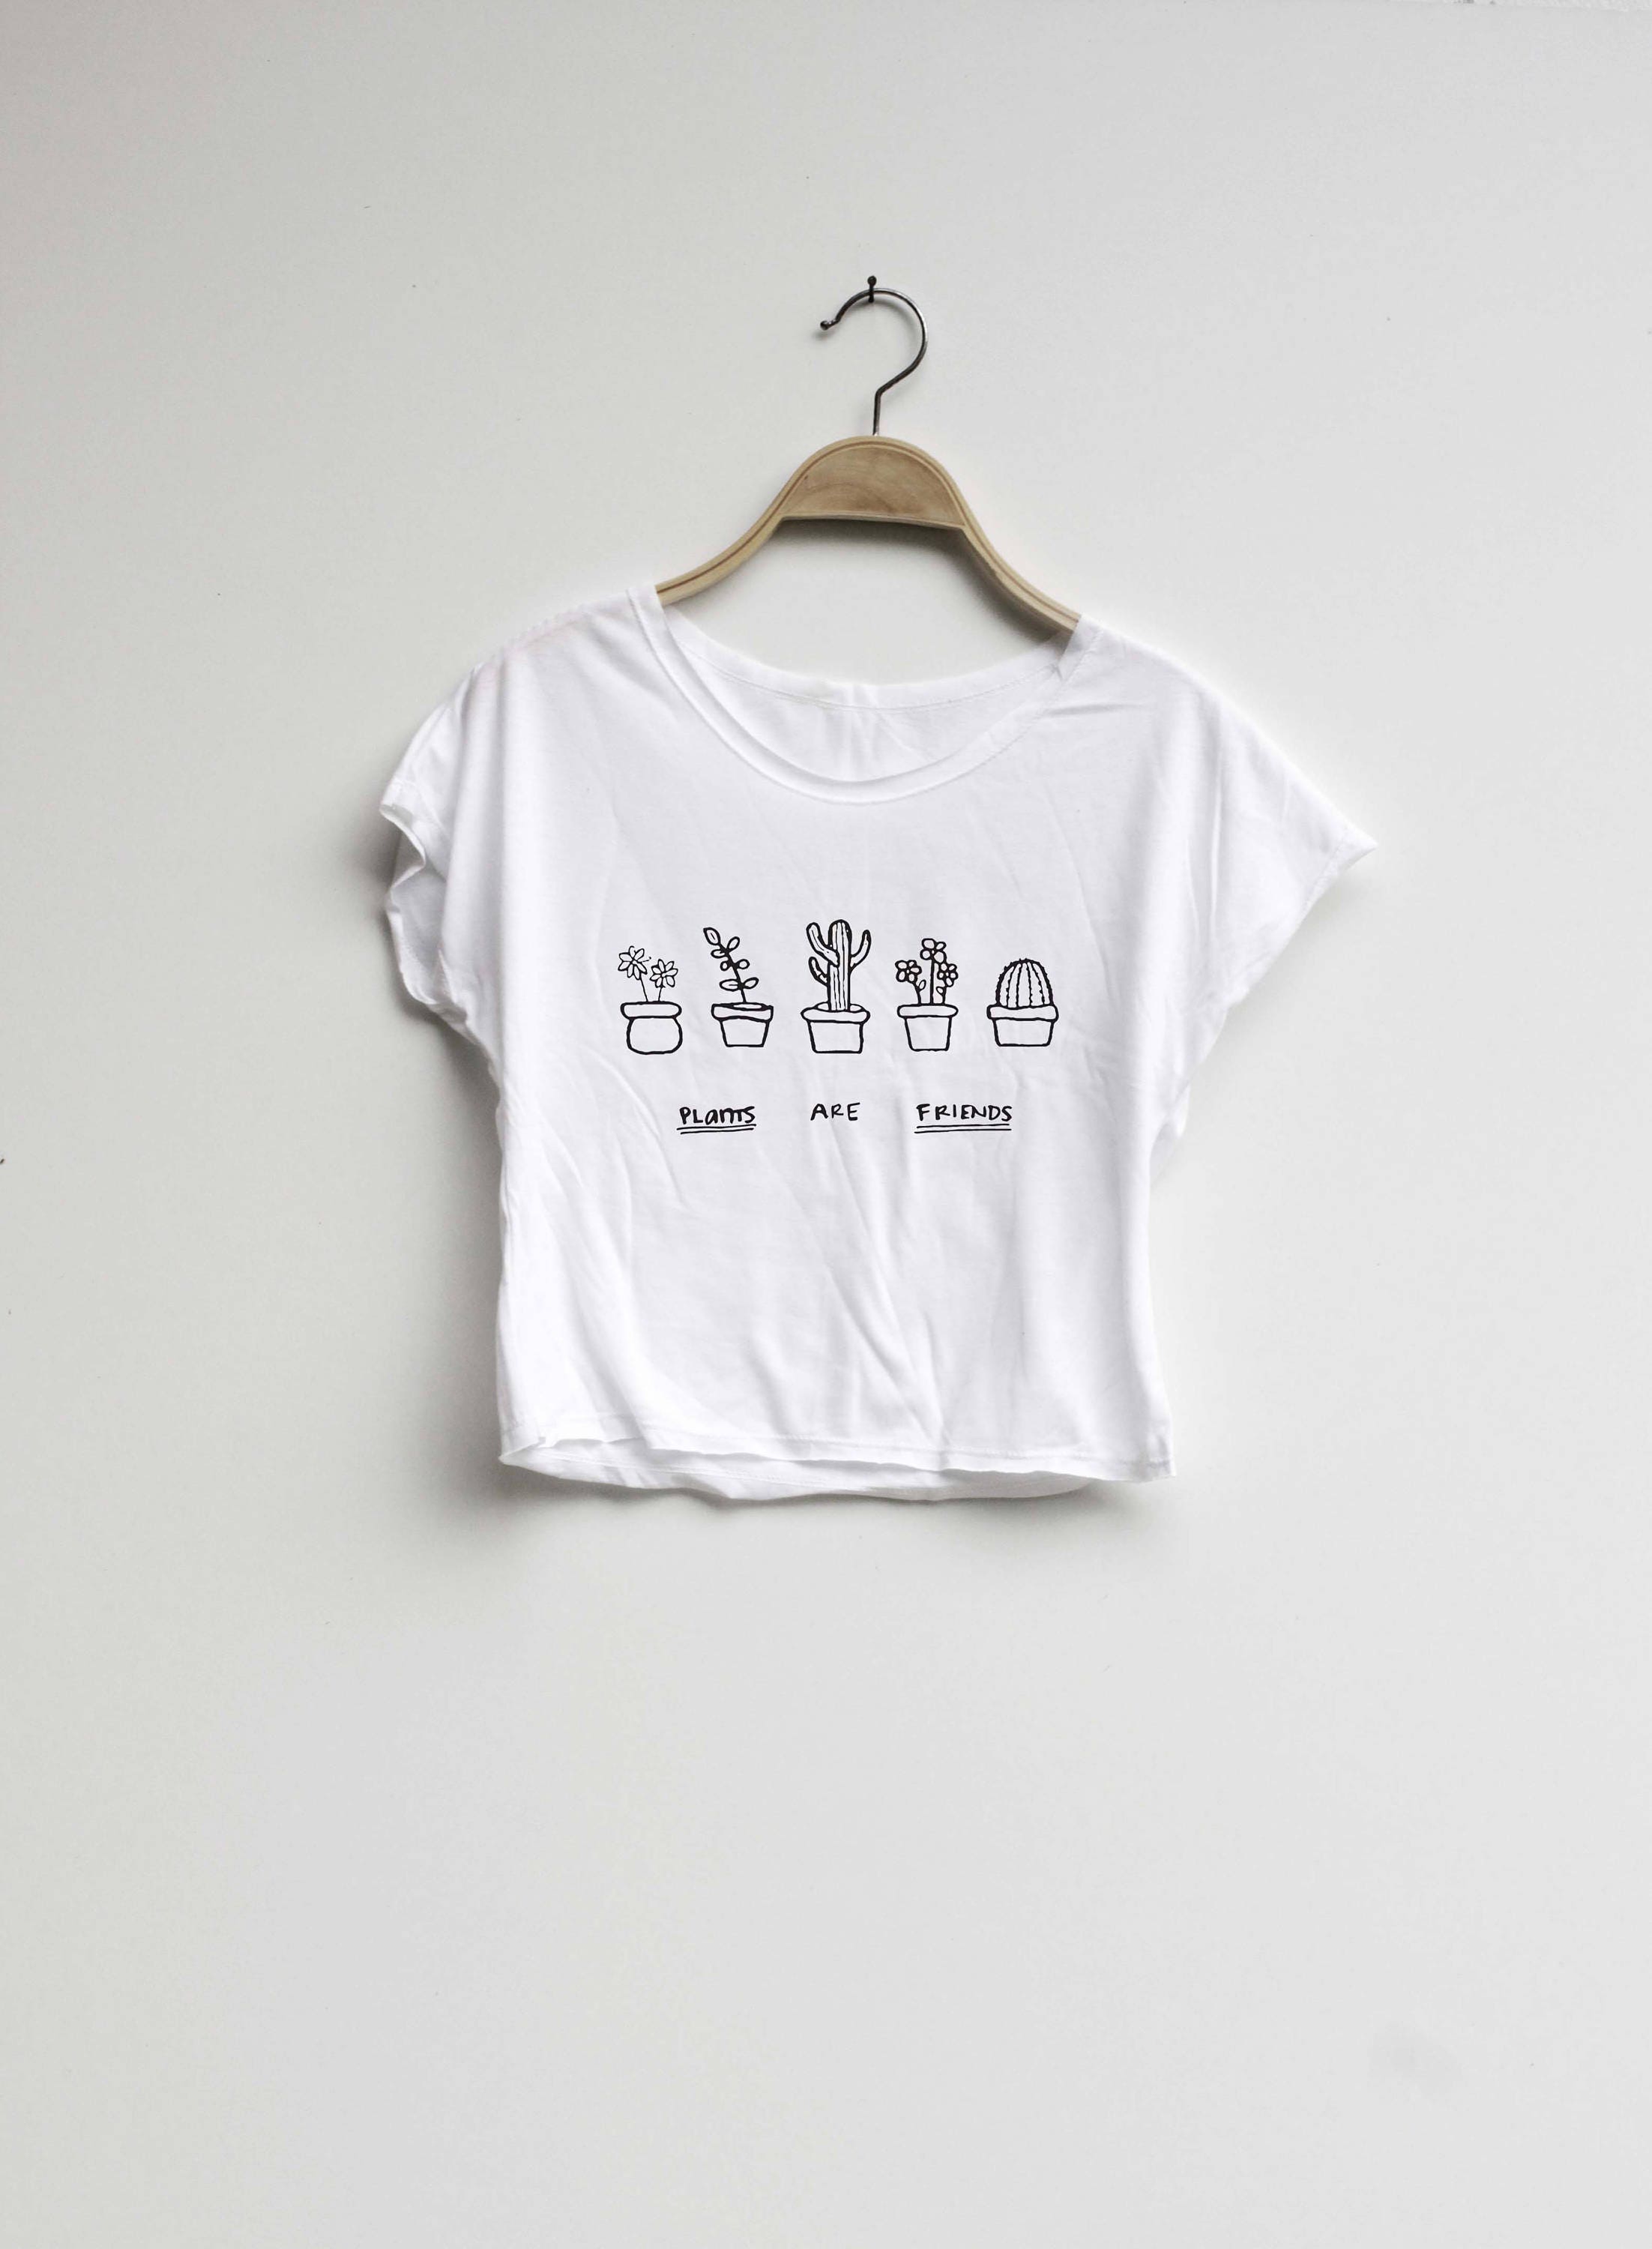 Plants Are Friends Crop Top TShirt T-Shirt T Shirt Tee | Etsy